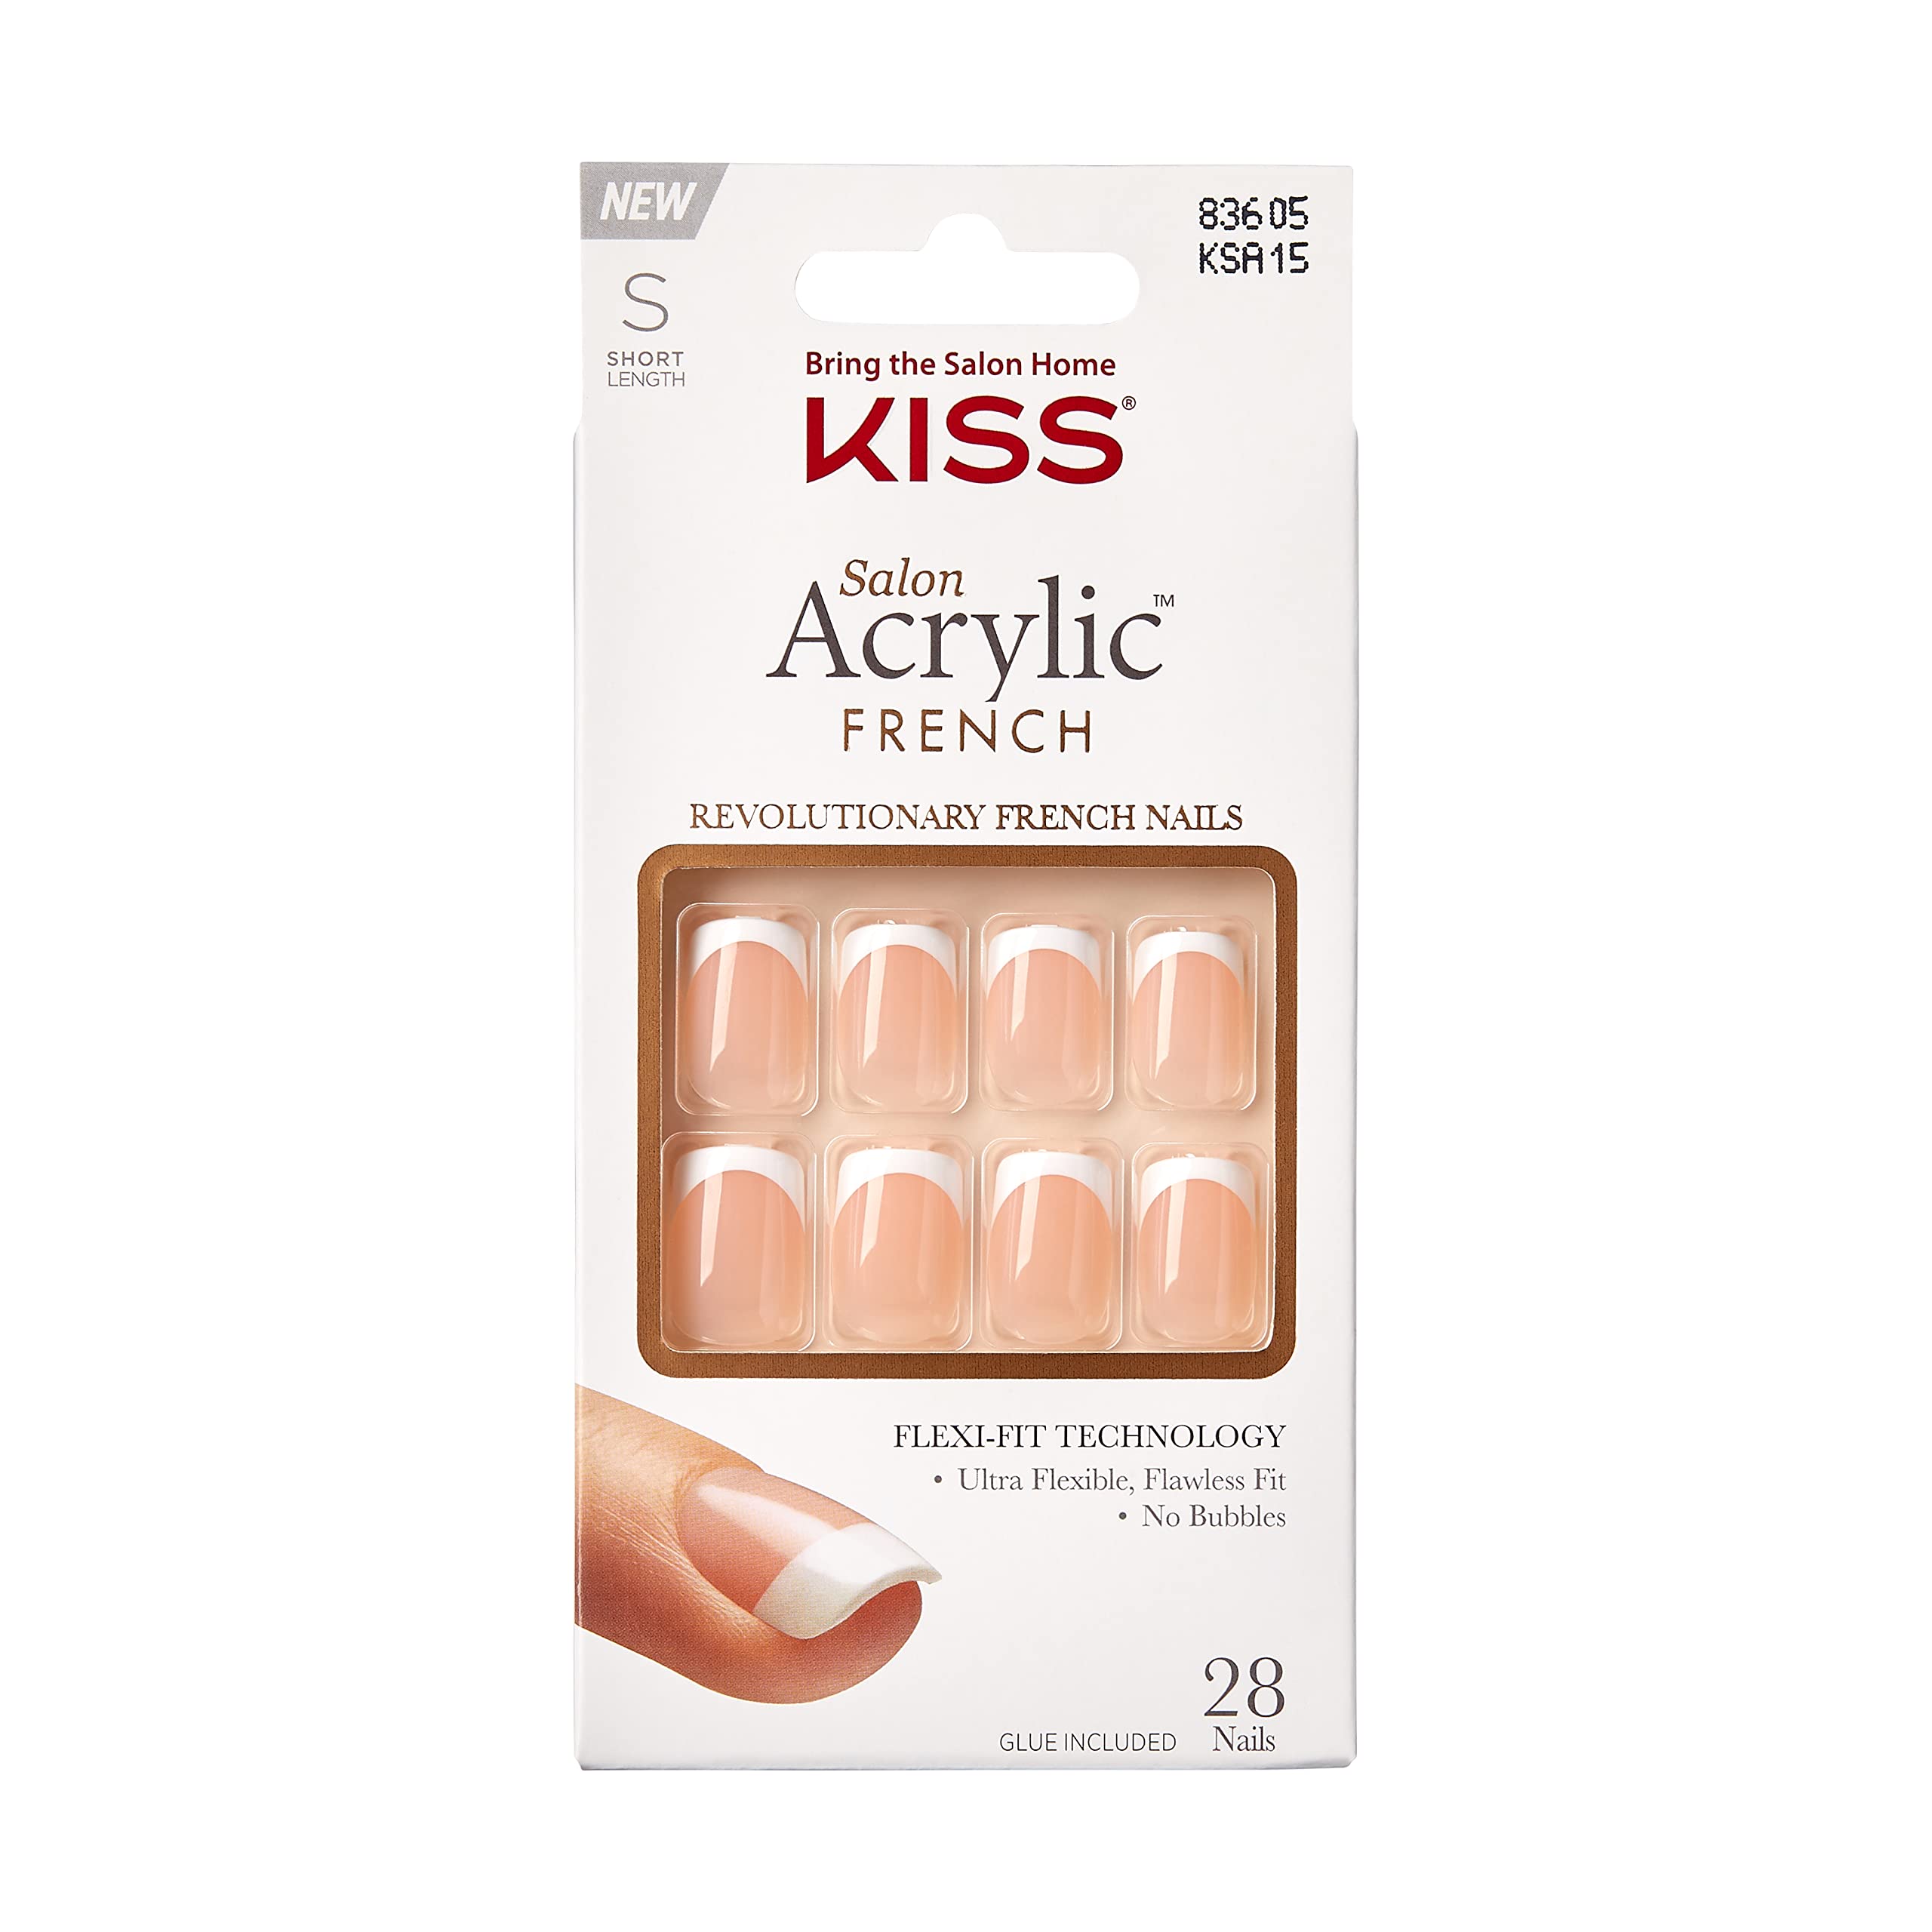 KISS Salon Acrylic Press On Nails, Nail glue included, 'Bonjour', Nude/ White, Short Size, Squoval Shape, Includes 28 Nails, 2g Glue, 1 Manicure Stick, 1 Mini File